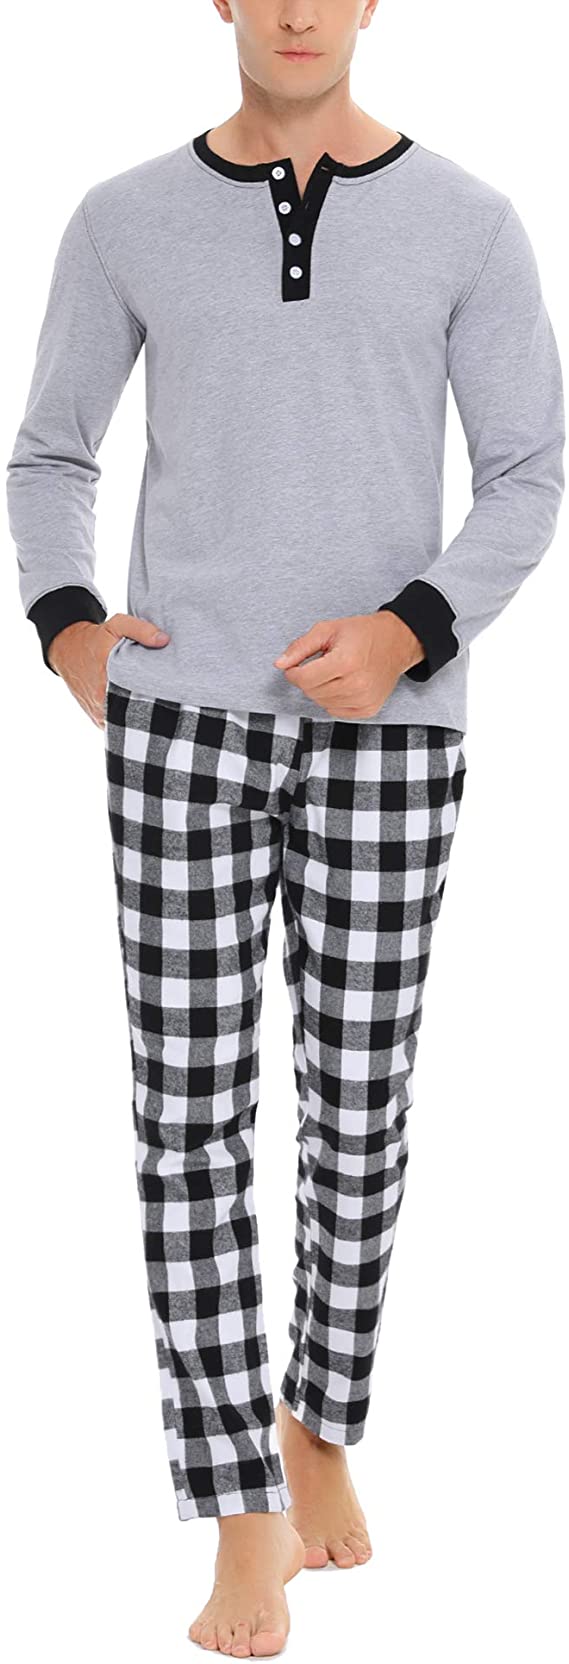 pijama hombre invierno